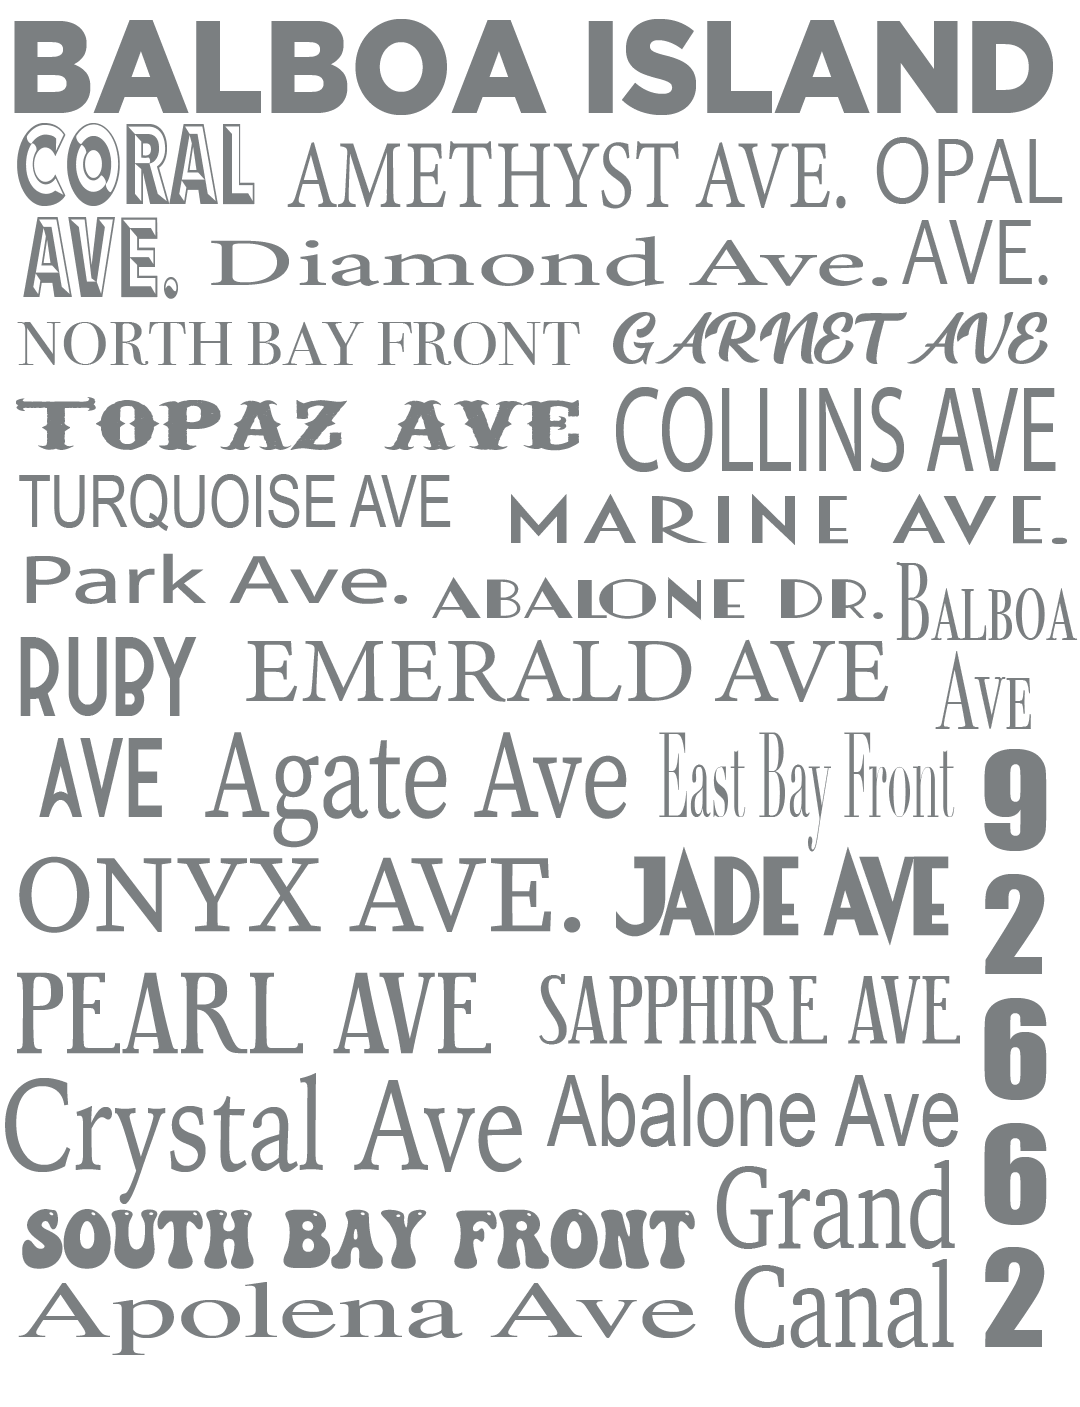 Street Name Balboa Island Print with Matte